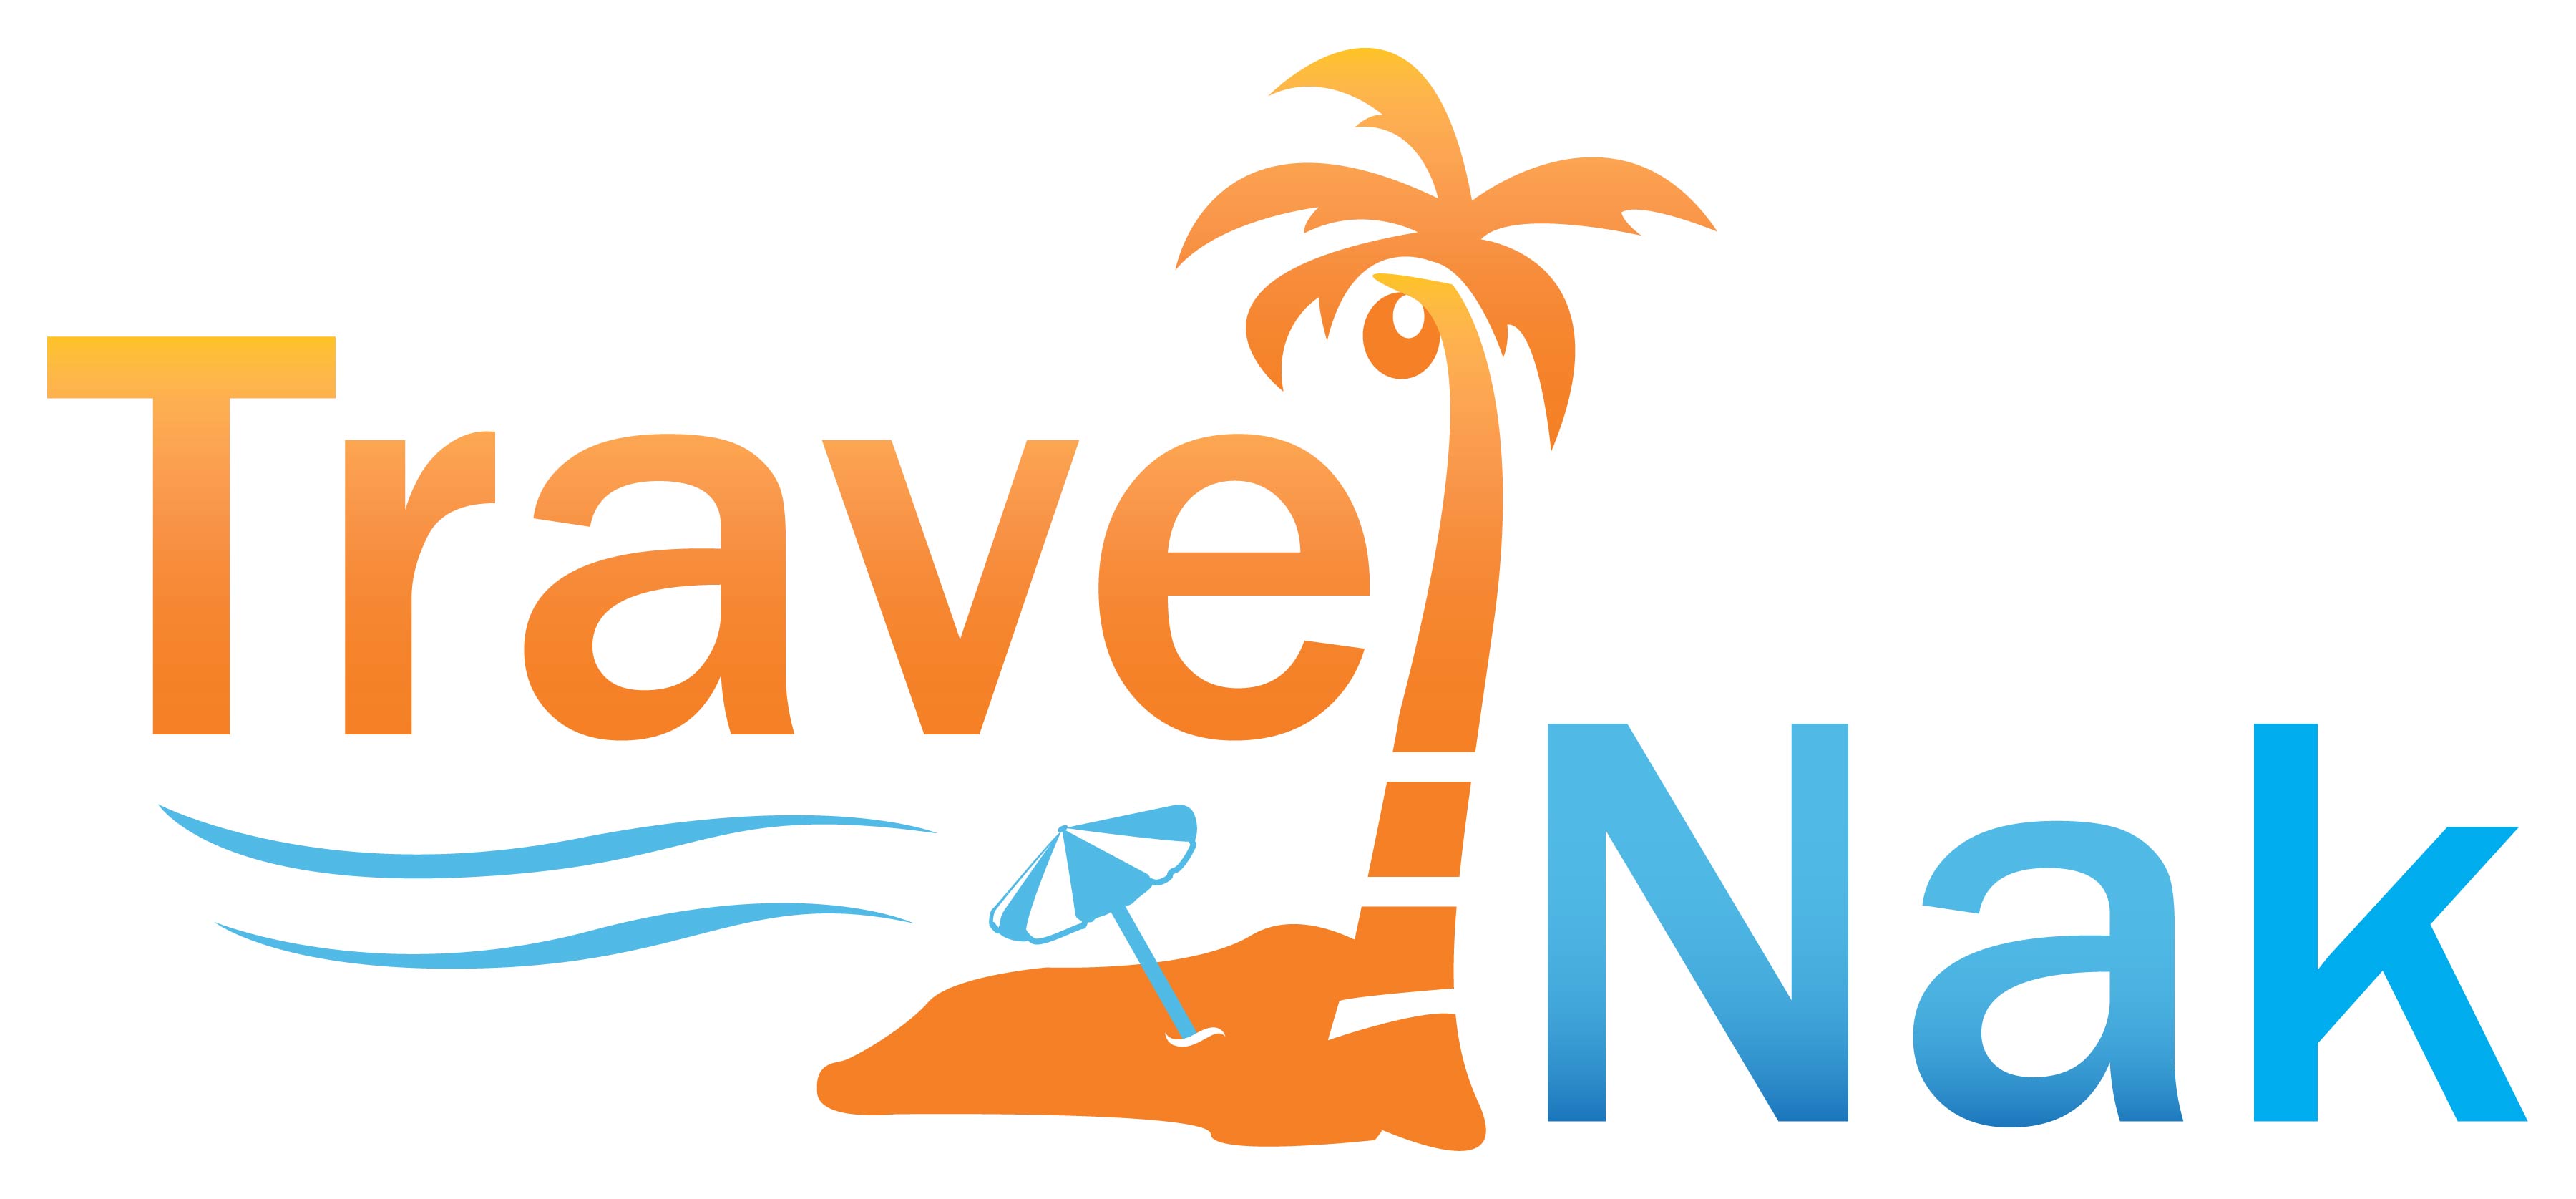 Intui travel. Travel логотип. Kg Travel логотип. Путешествие лого. Jazeera Travel логотип.